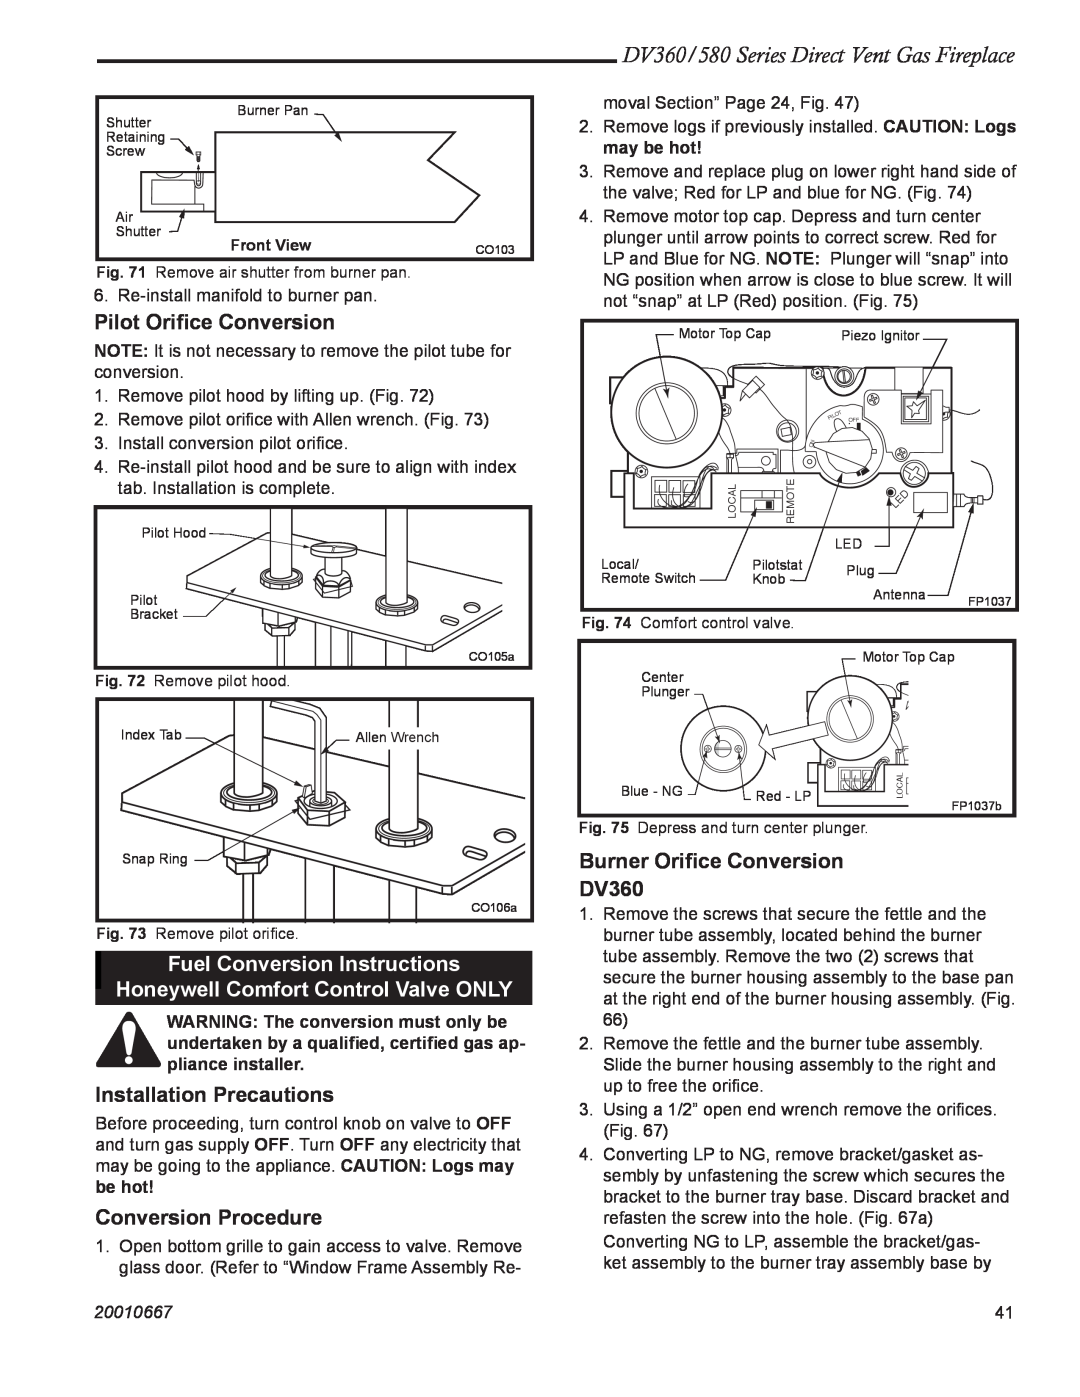 Vermont Casting DV580 Fuel Conversion Instructions Honeywell Comfort Control Valve ONLY, Pilot Oriﬁce Conversion, 20010667 